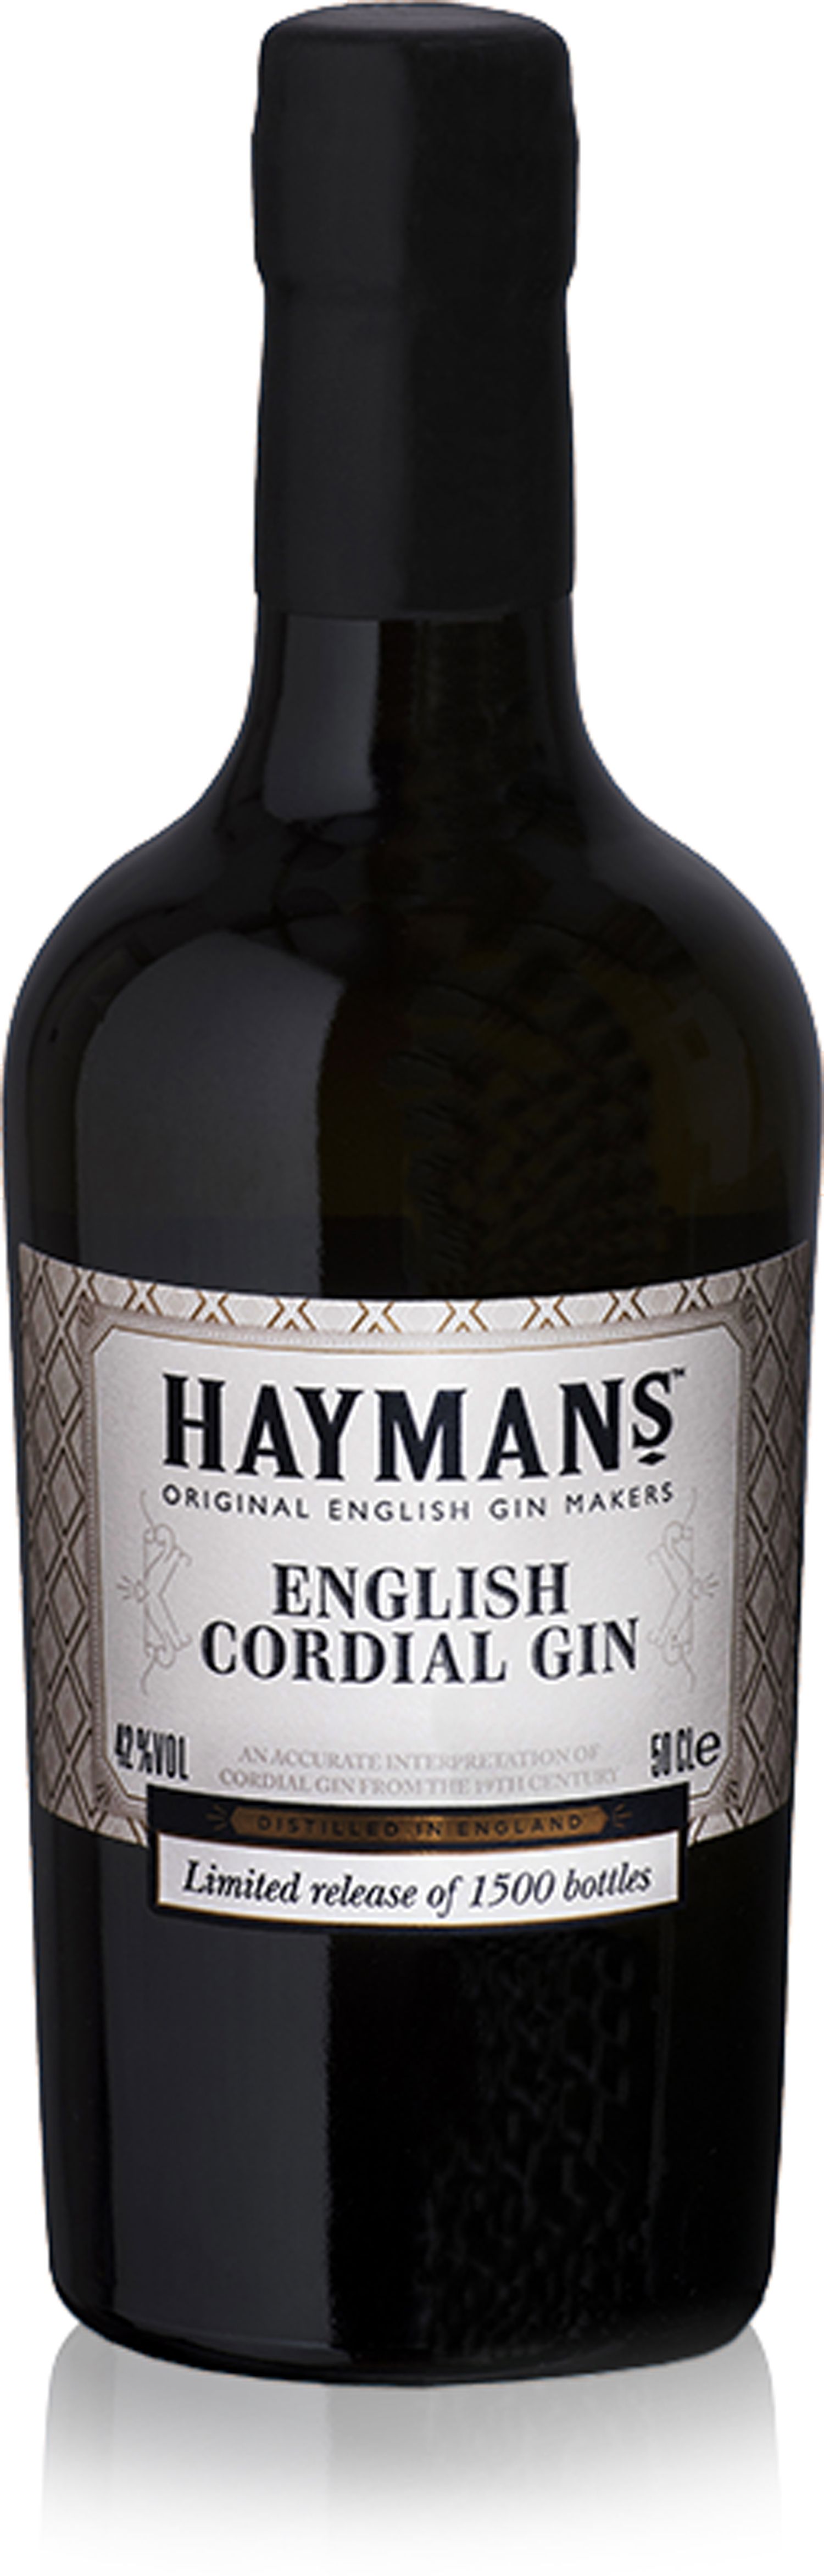 English Gin Haymans 50cl Cordial